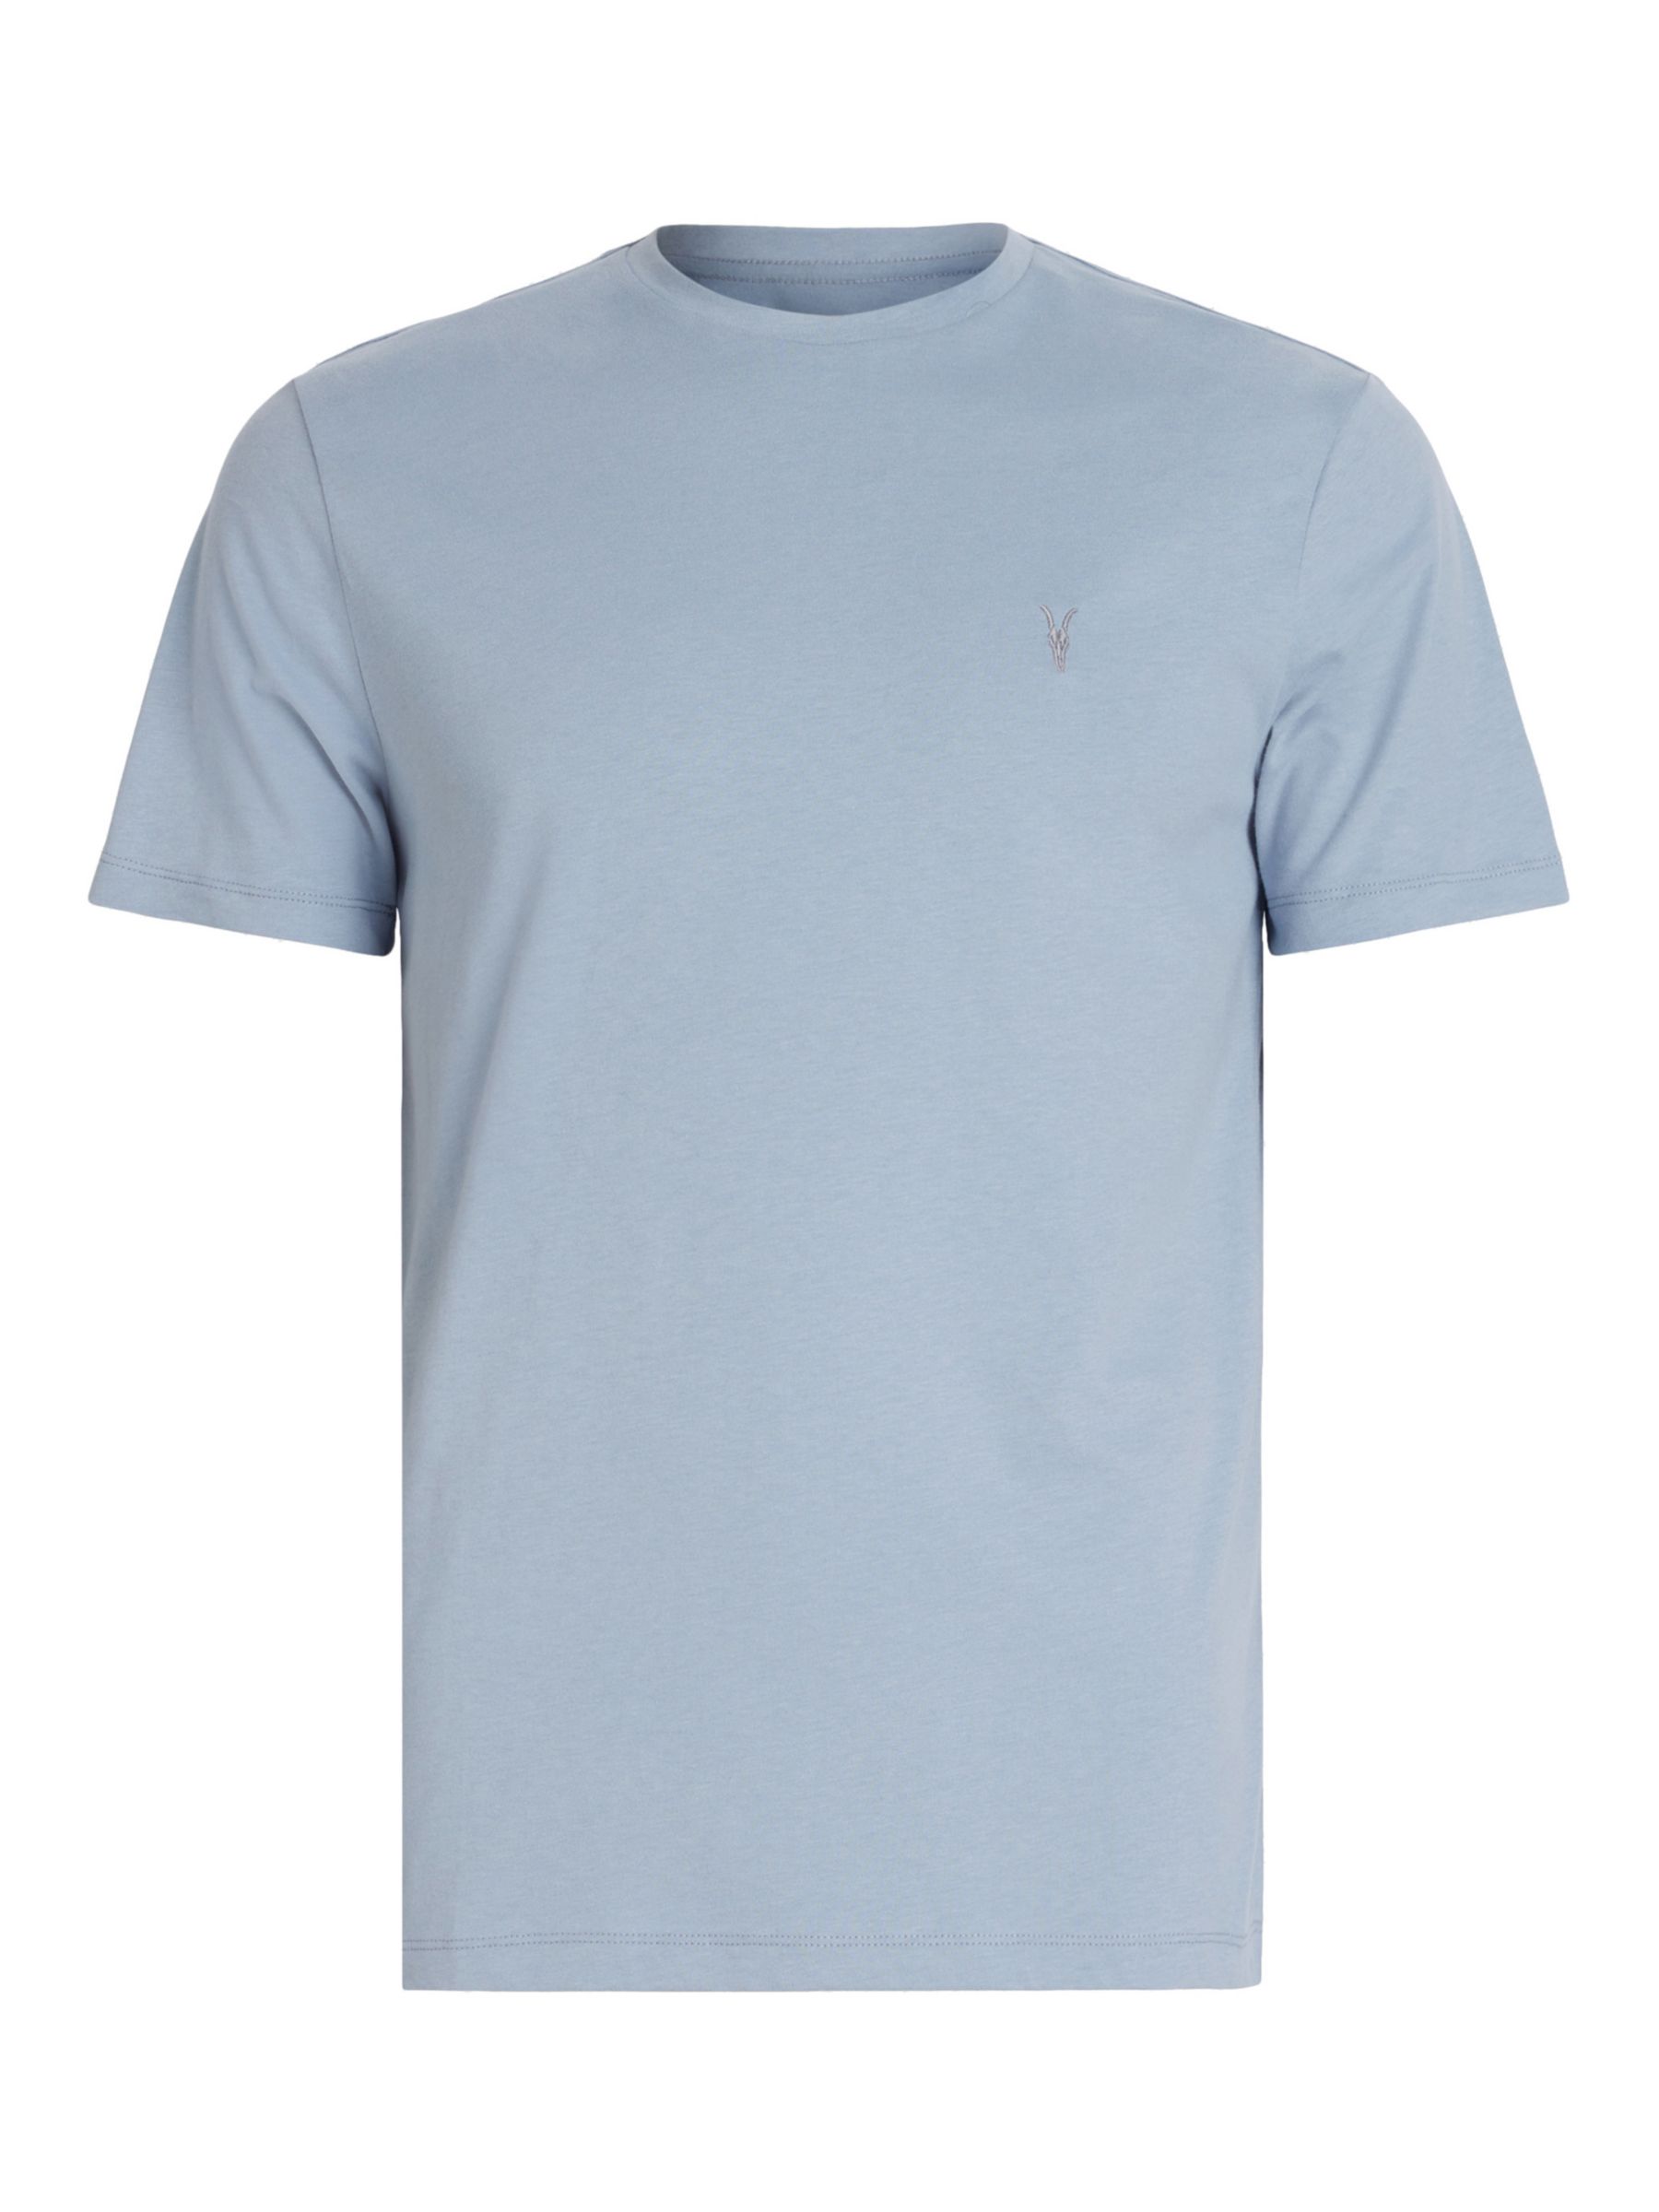 AllSaints Brace Crew T-Shirt, Chilled Blue at John Lewis & Partners